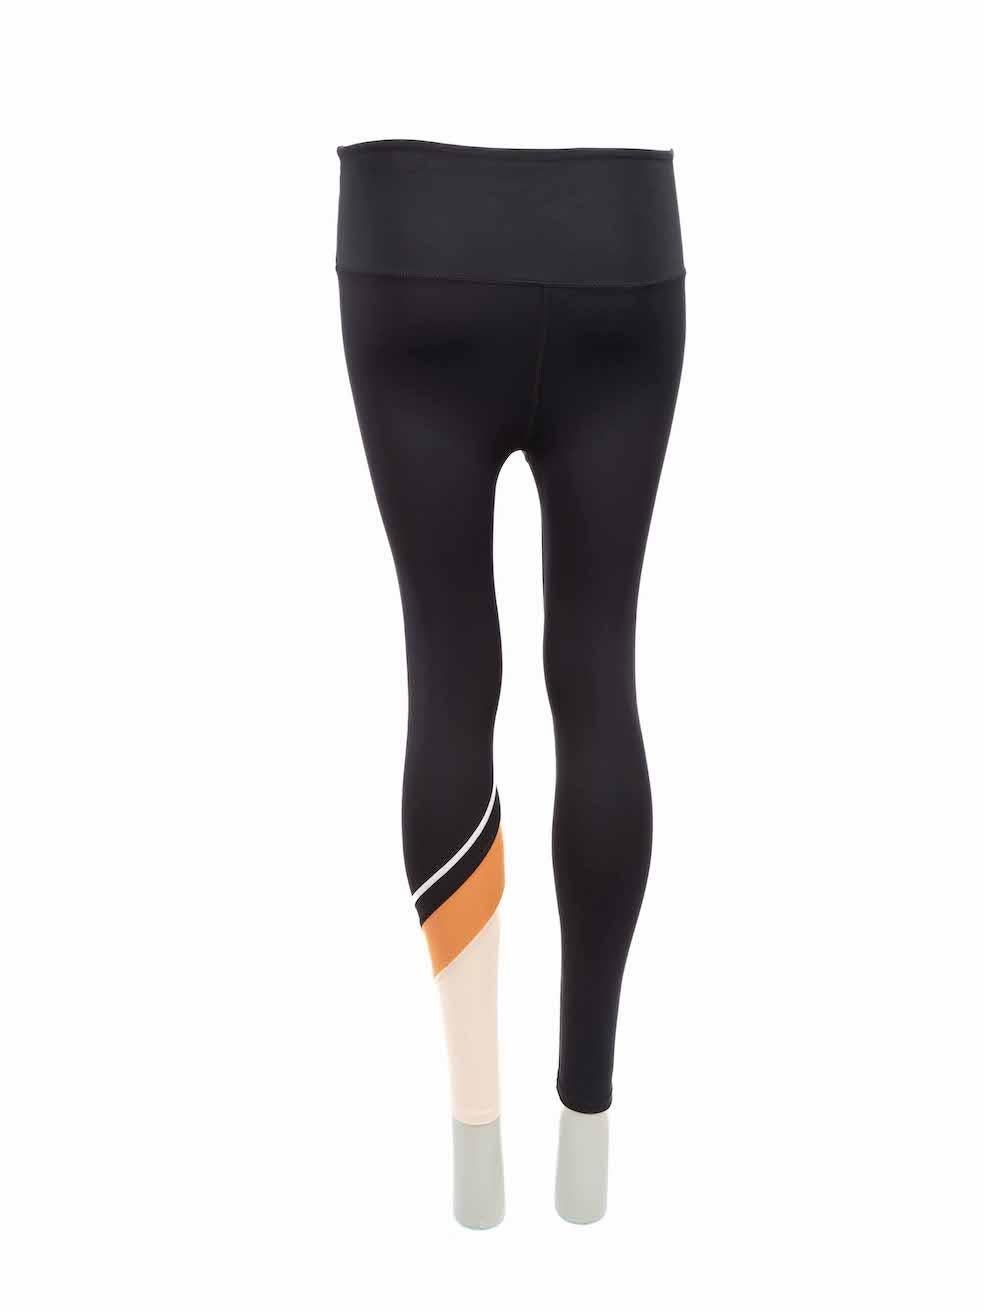 P.E Nation Black Striped Cuff Sport Leggings Size XS In Excellent Condition For Sale In London, GB